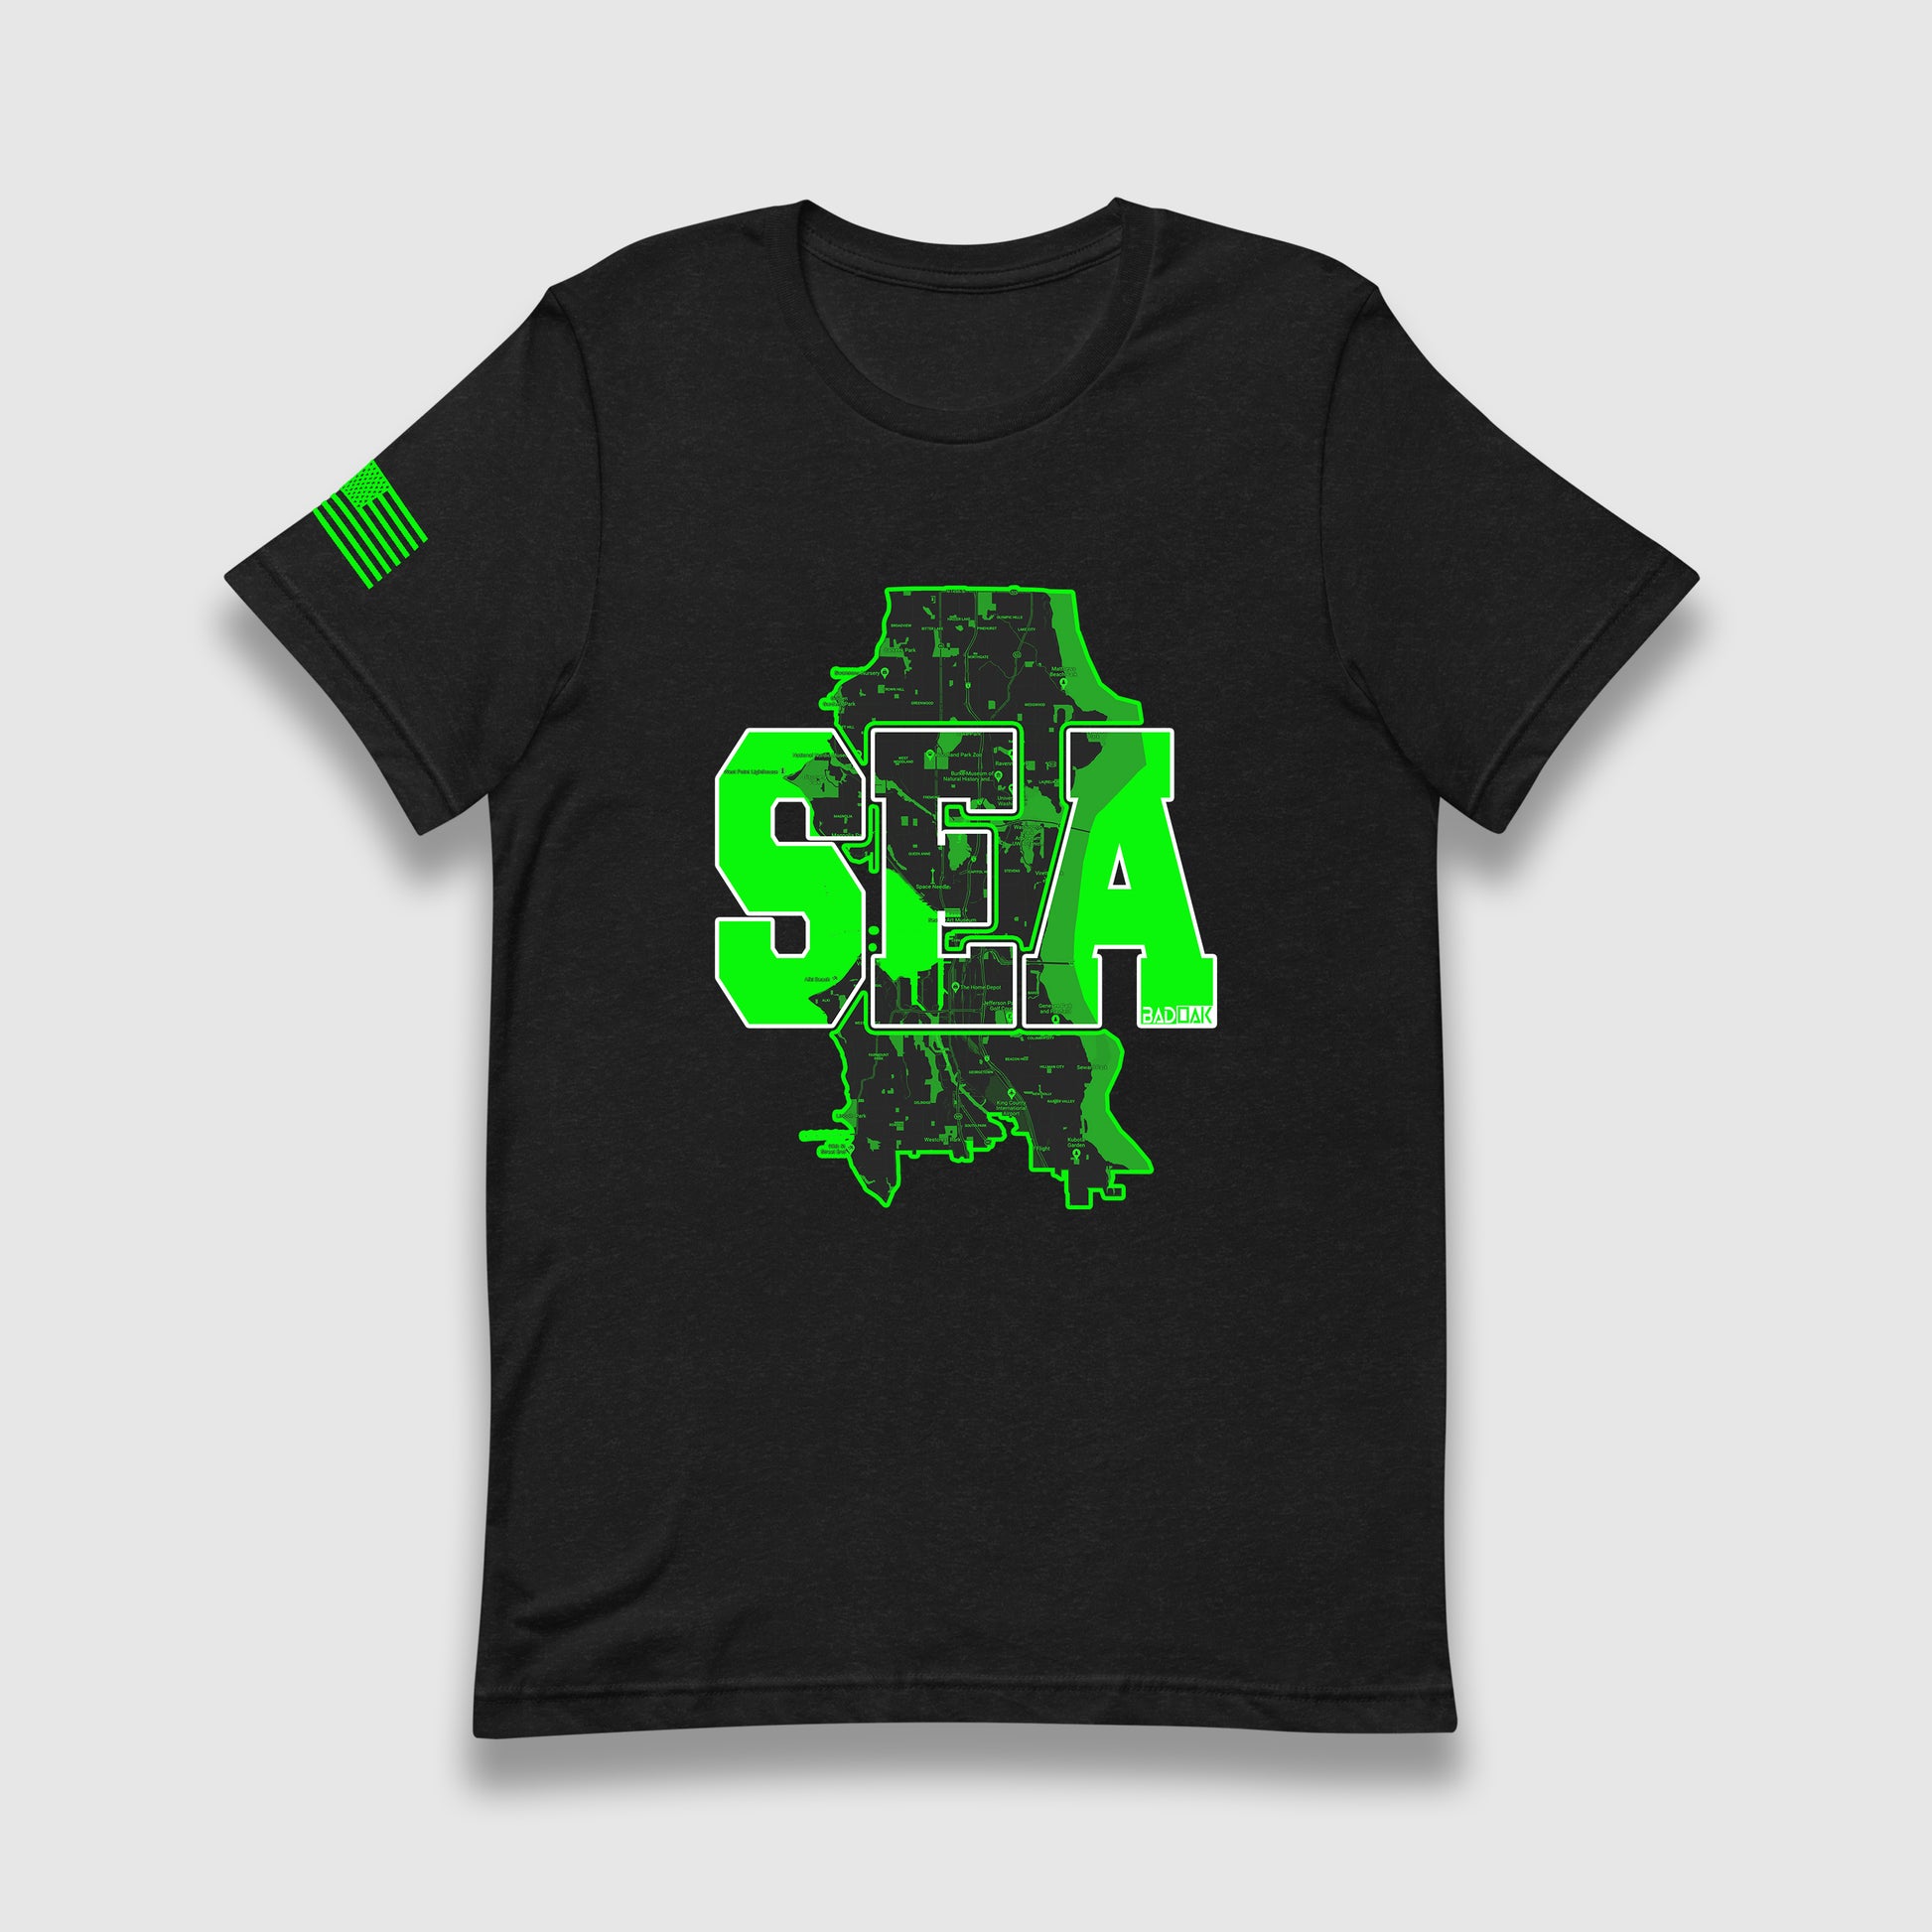 SEA (Seattle) Unisex T-Shirt - BAD OAK